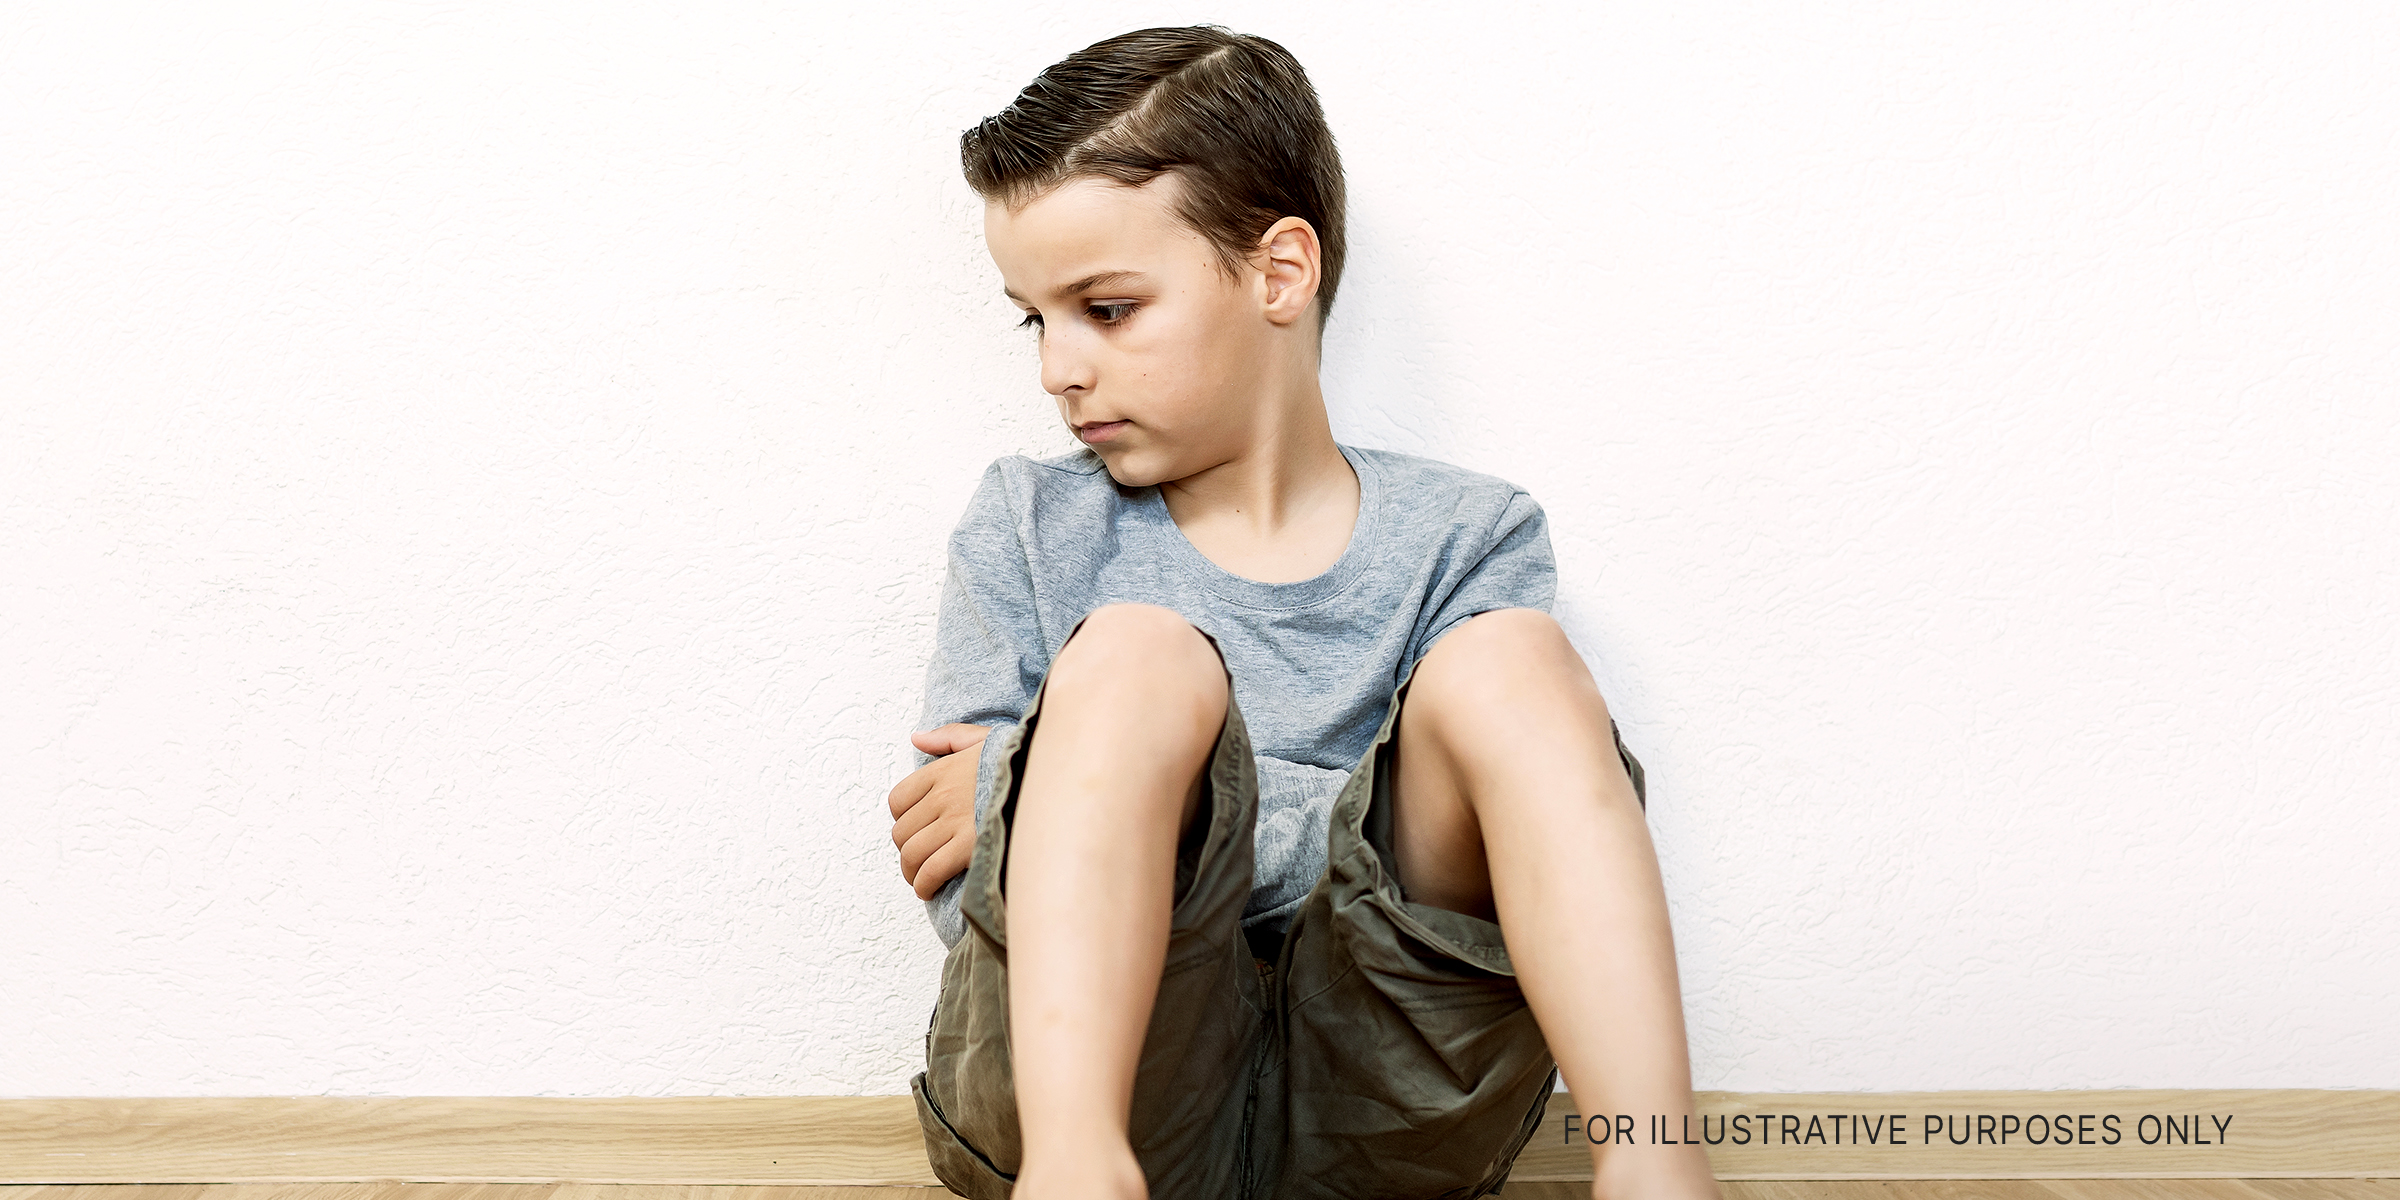 Sad boy sitting lonely | Source: Shutterstock